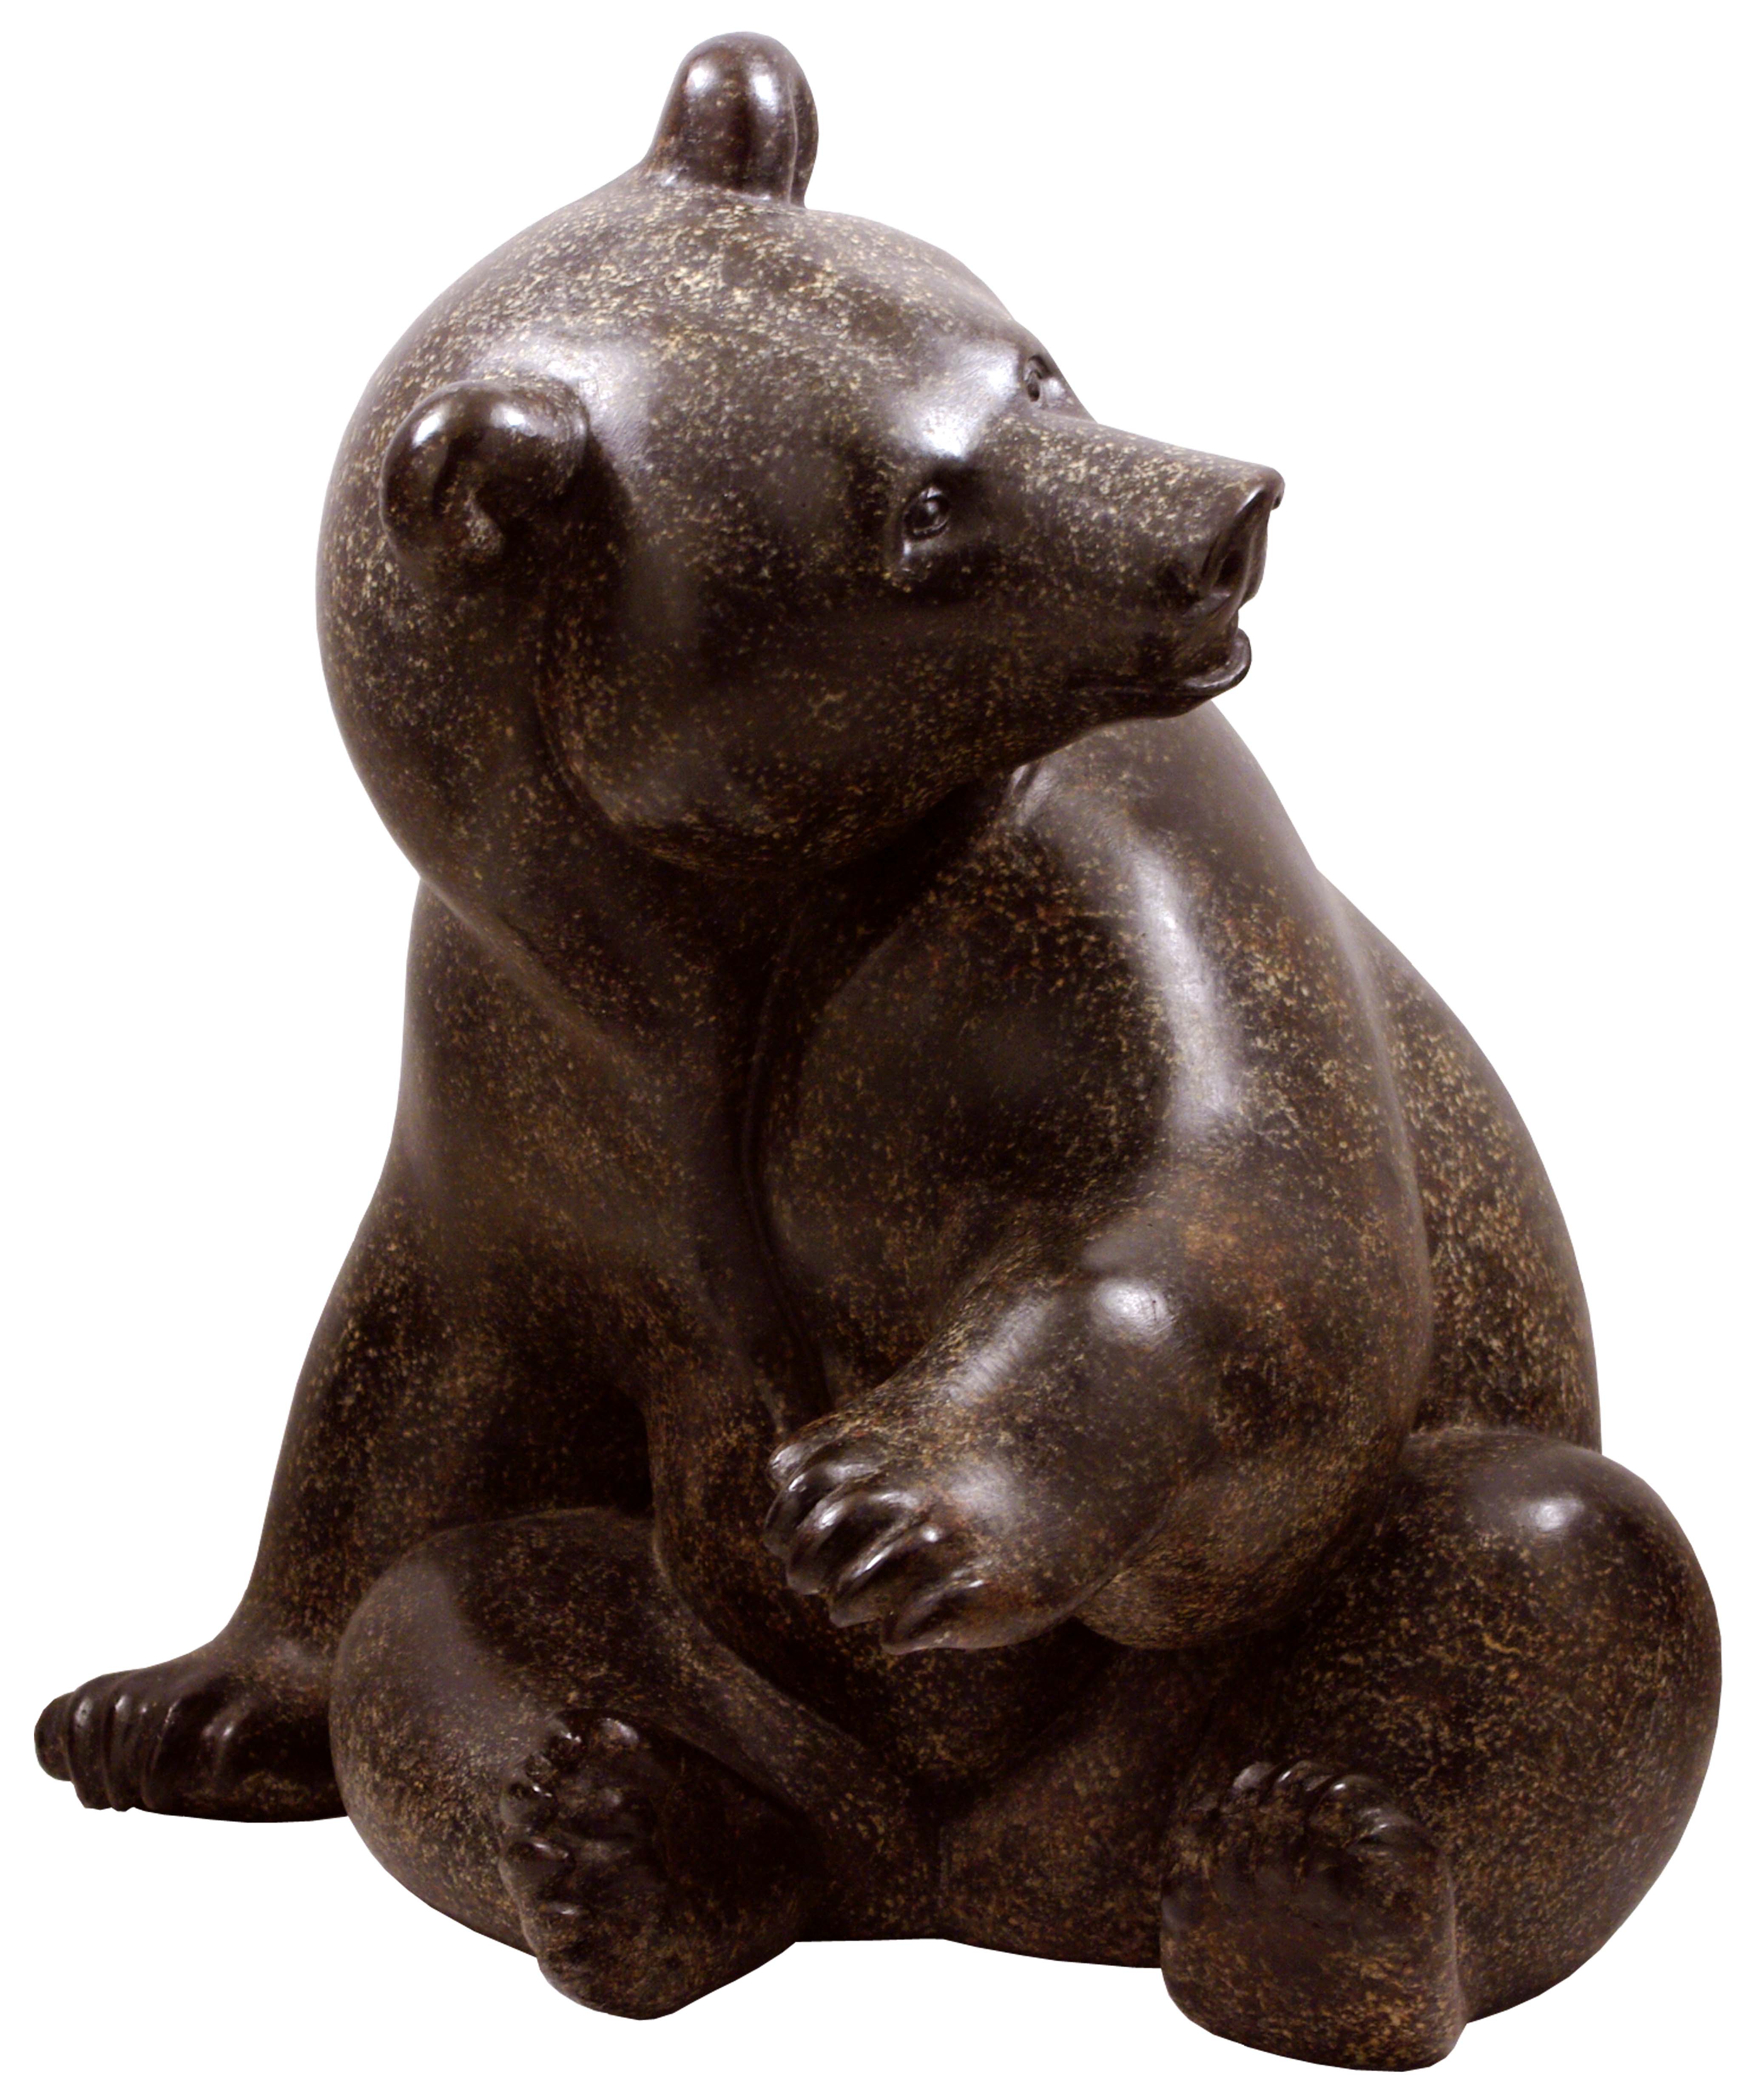 ours-bronze-animaux-bassompierre-sculpture